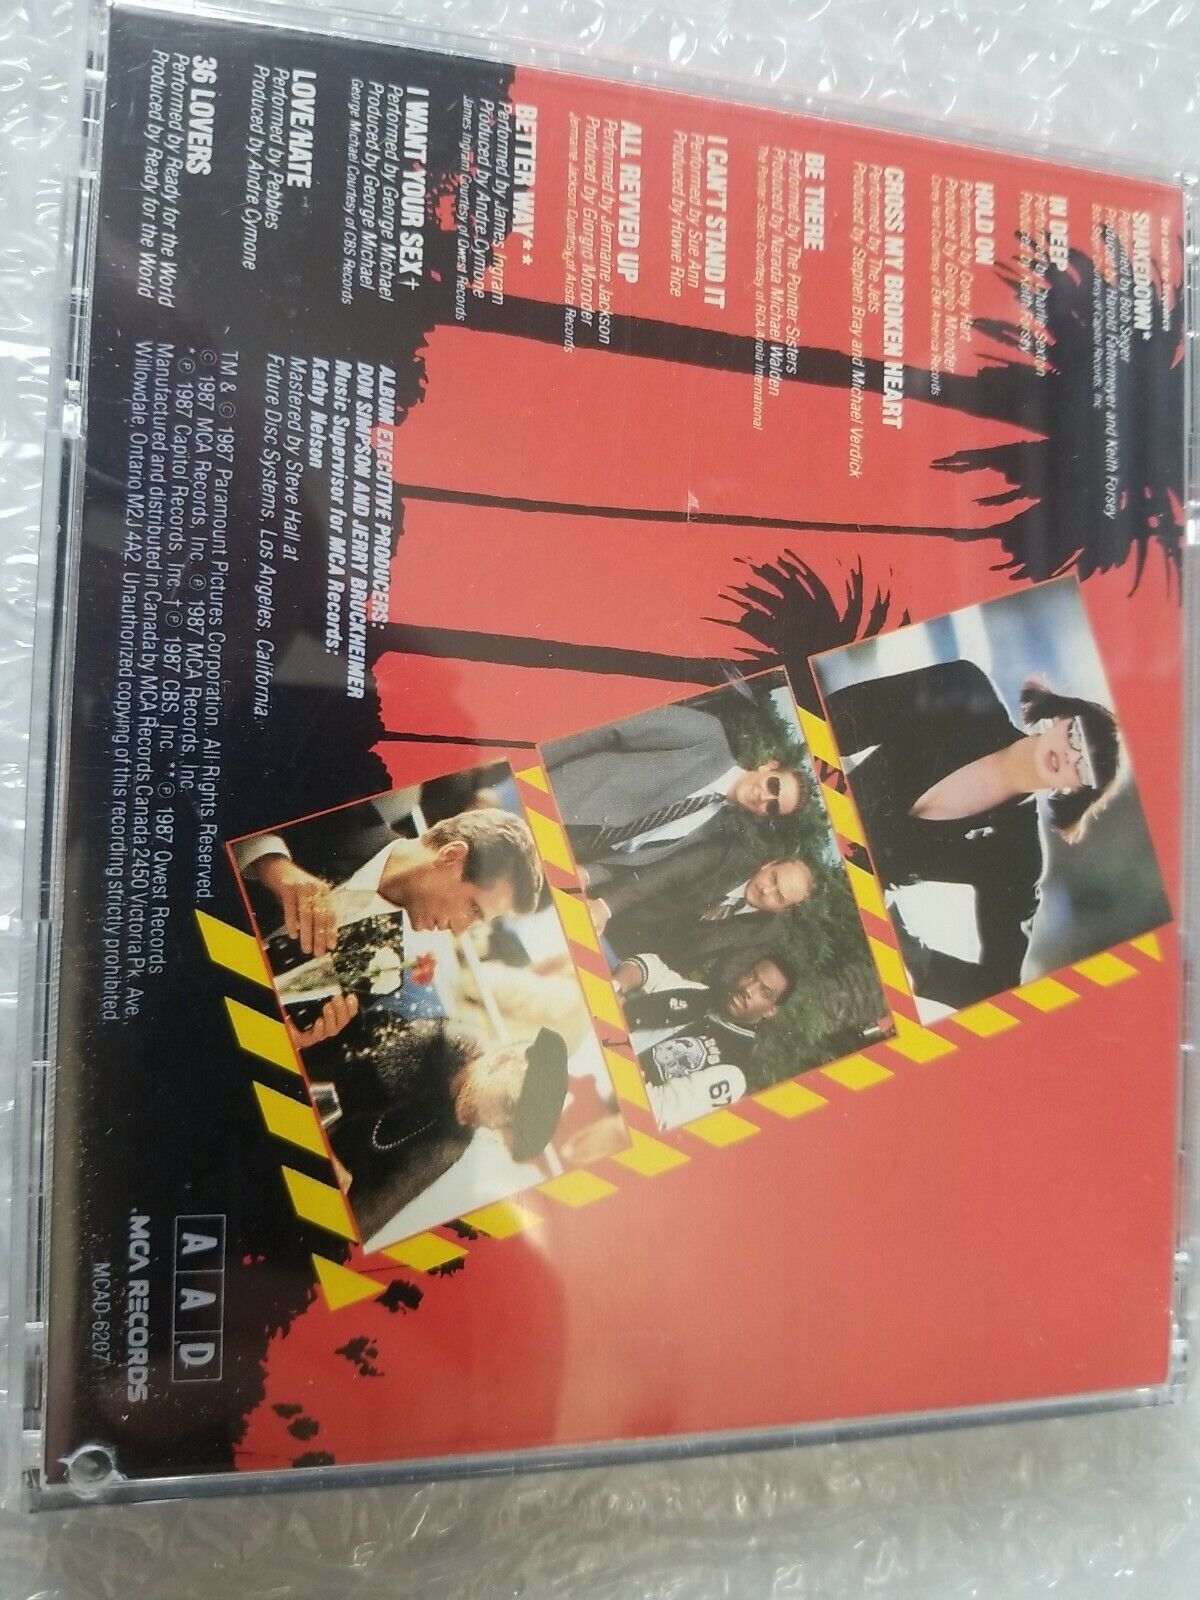 Beverly Hills Cop II by Original Soundtrack (CD, Oct-1990, MCA)